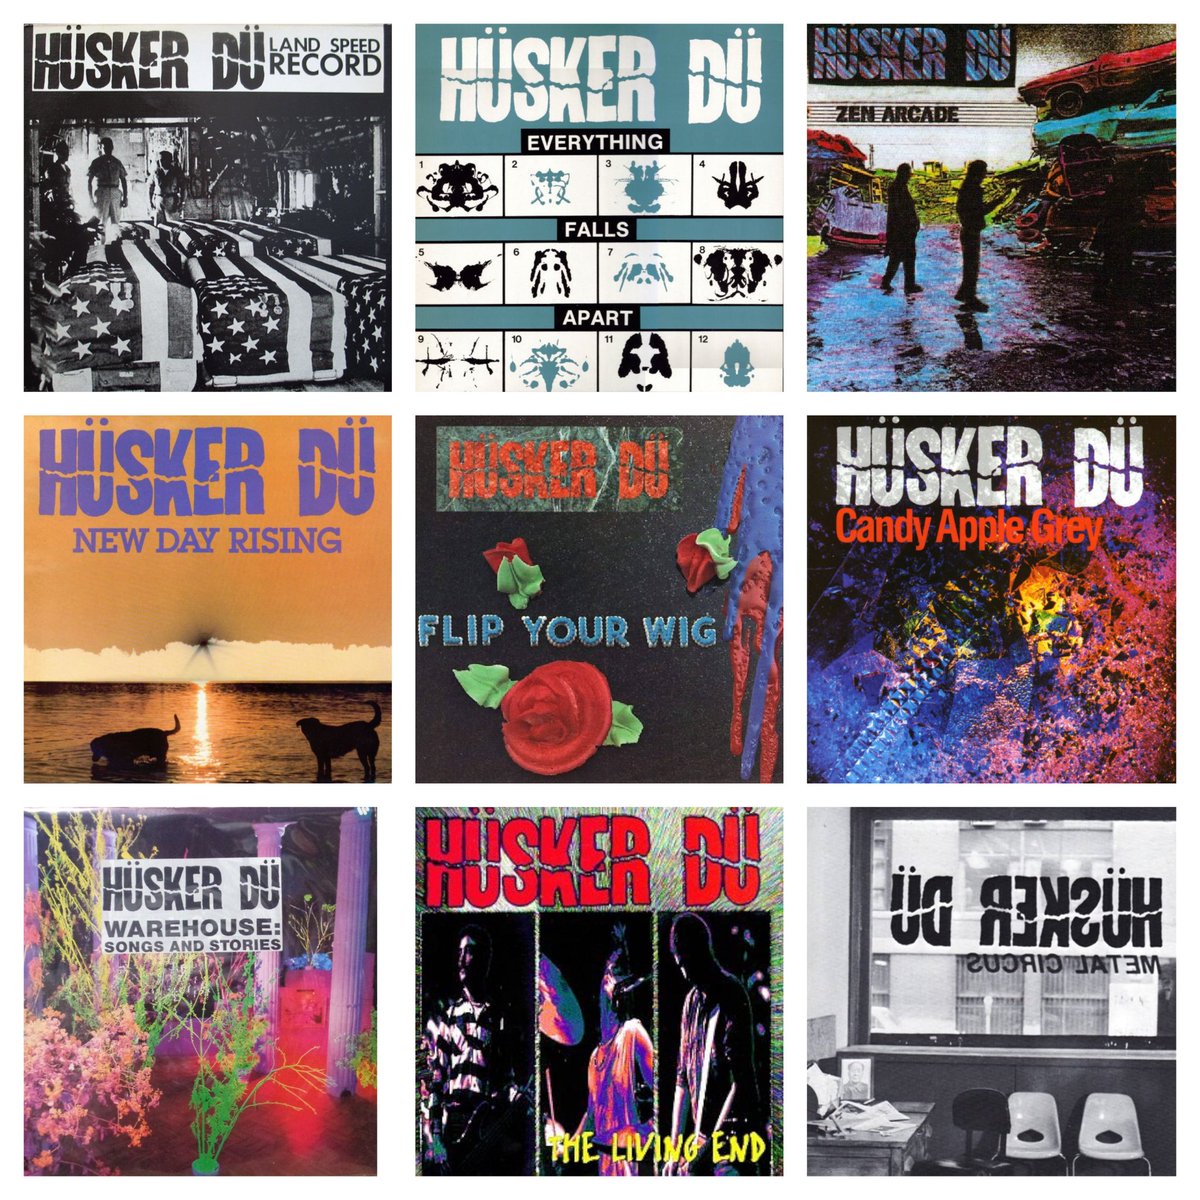 The Hüsker Dü collection

What album do you keep pulling off the shelf?

#punk #punks #punkrock #huskerdu #hüskerdü #history #punkrockhistory